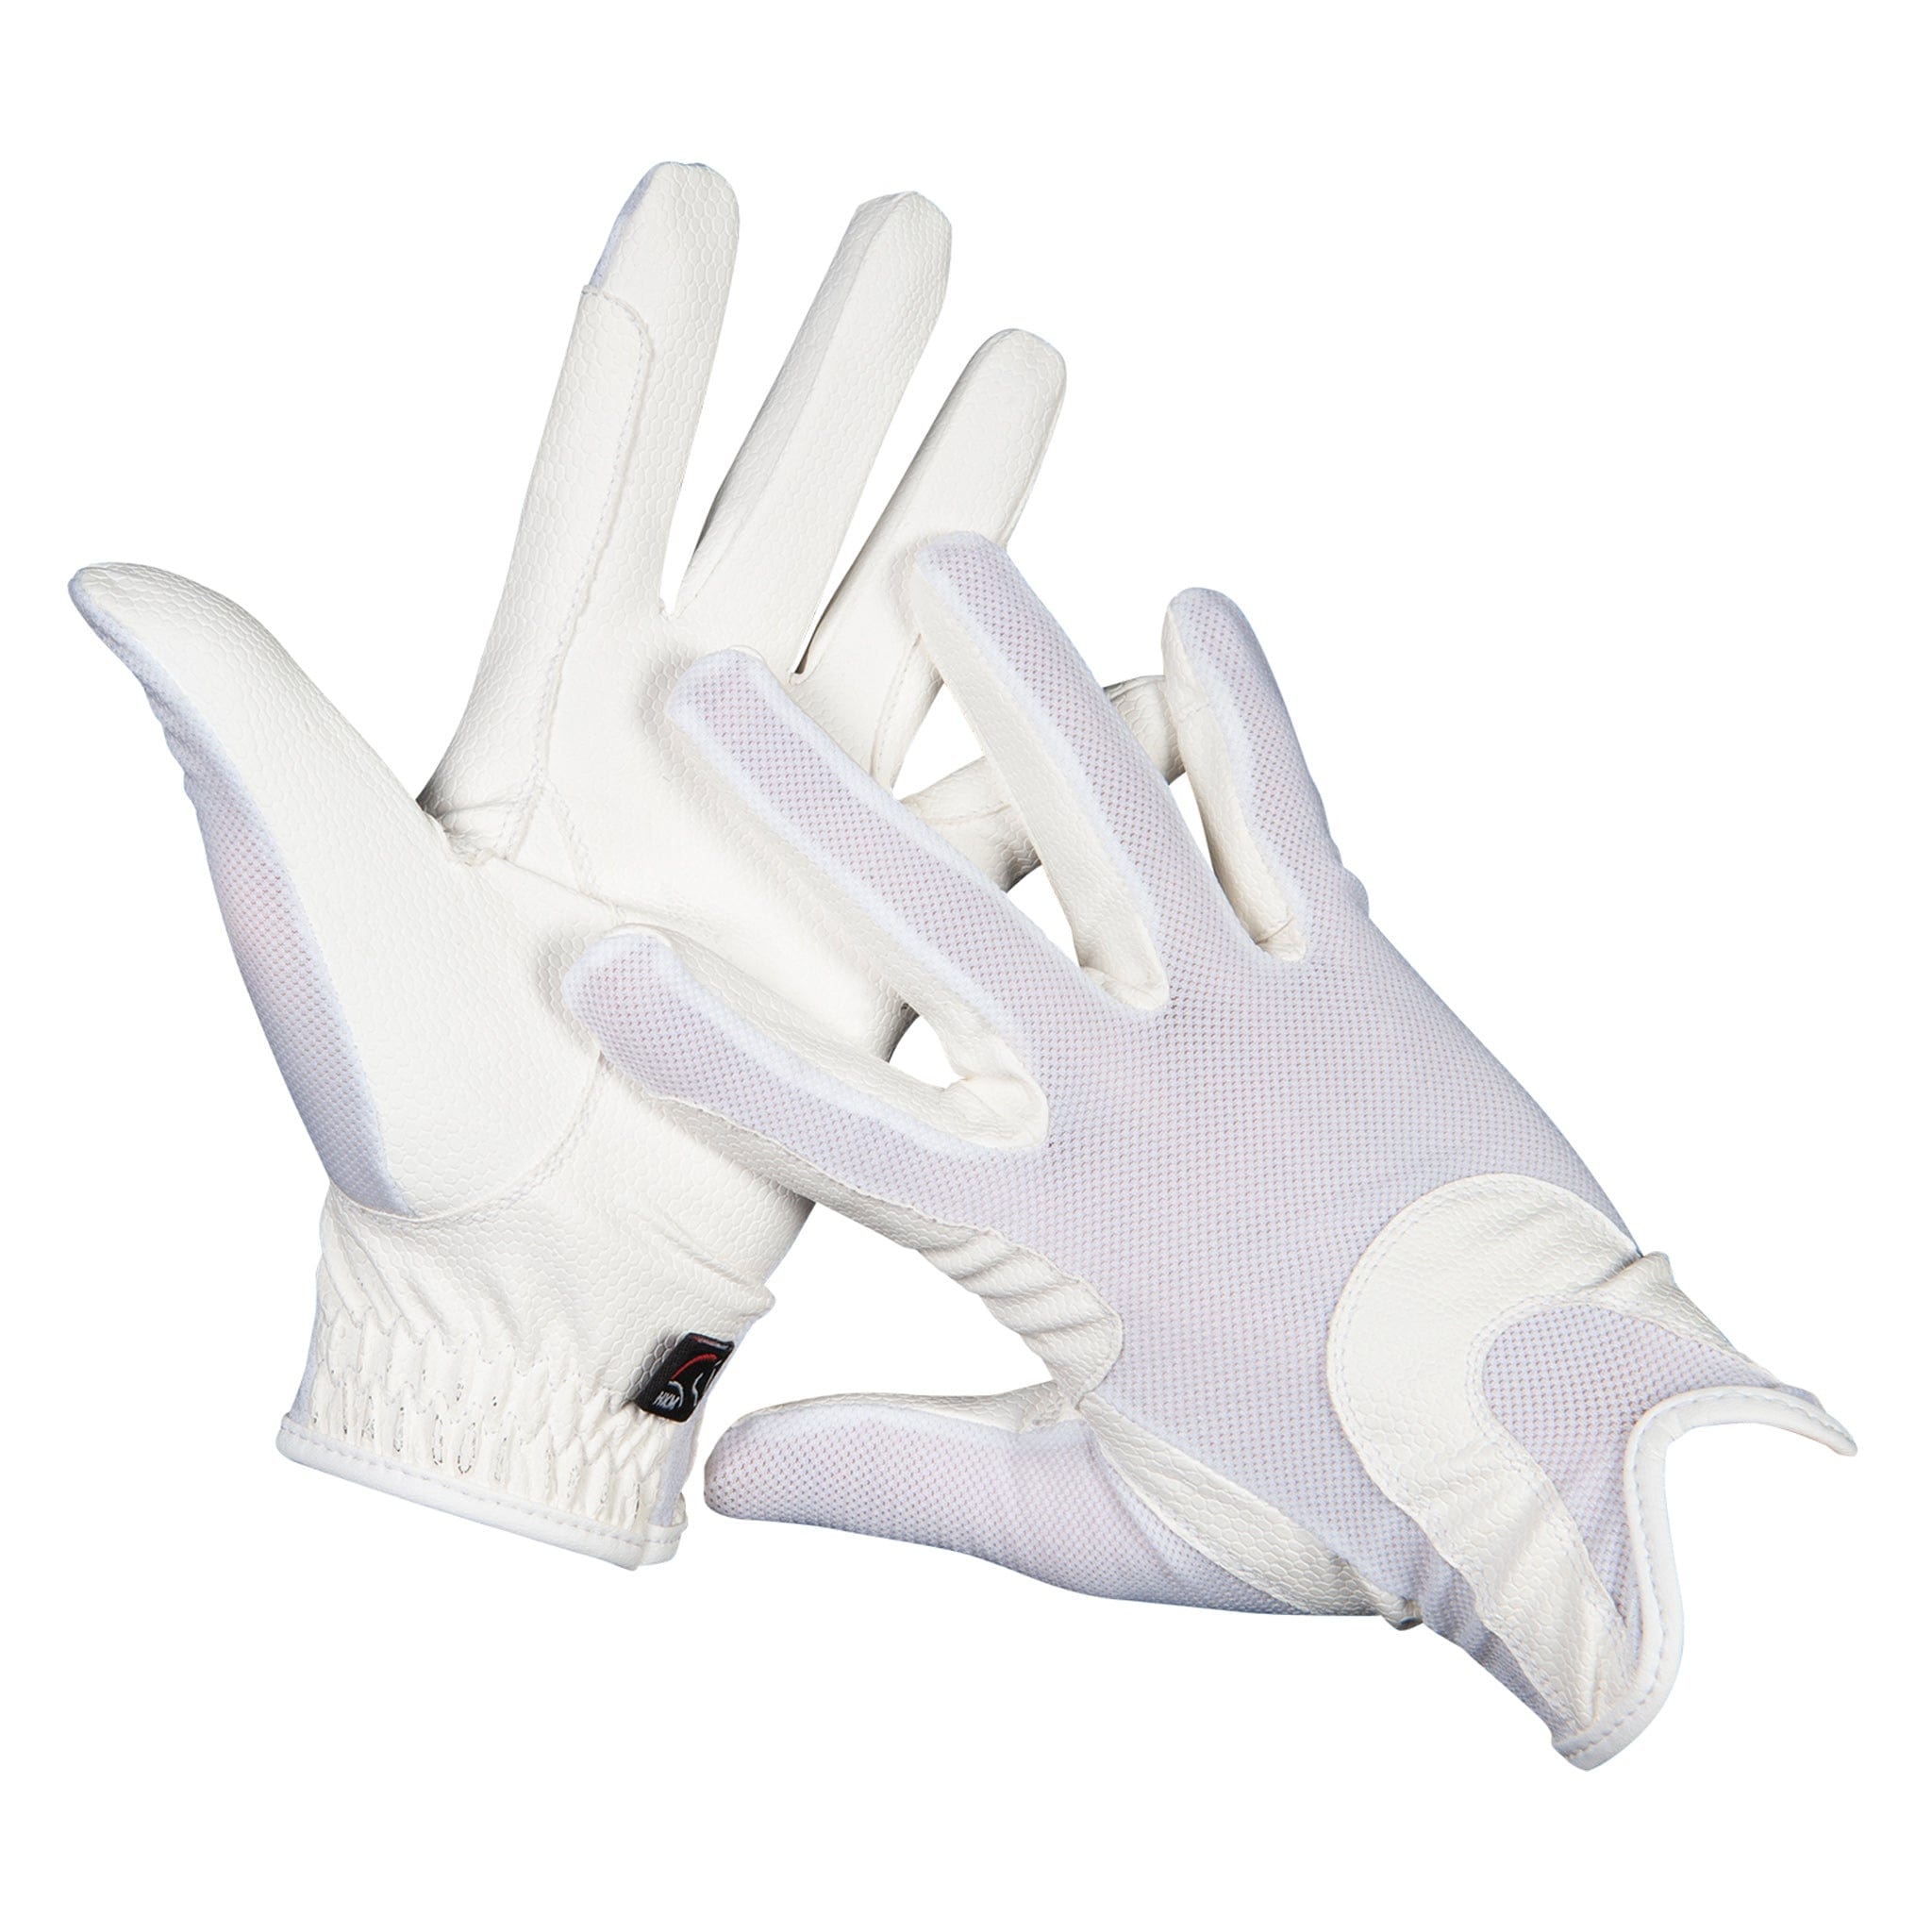 HKM Mesh Grip Riding Gloves 12815 White Pair